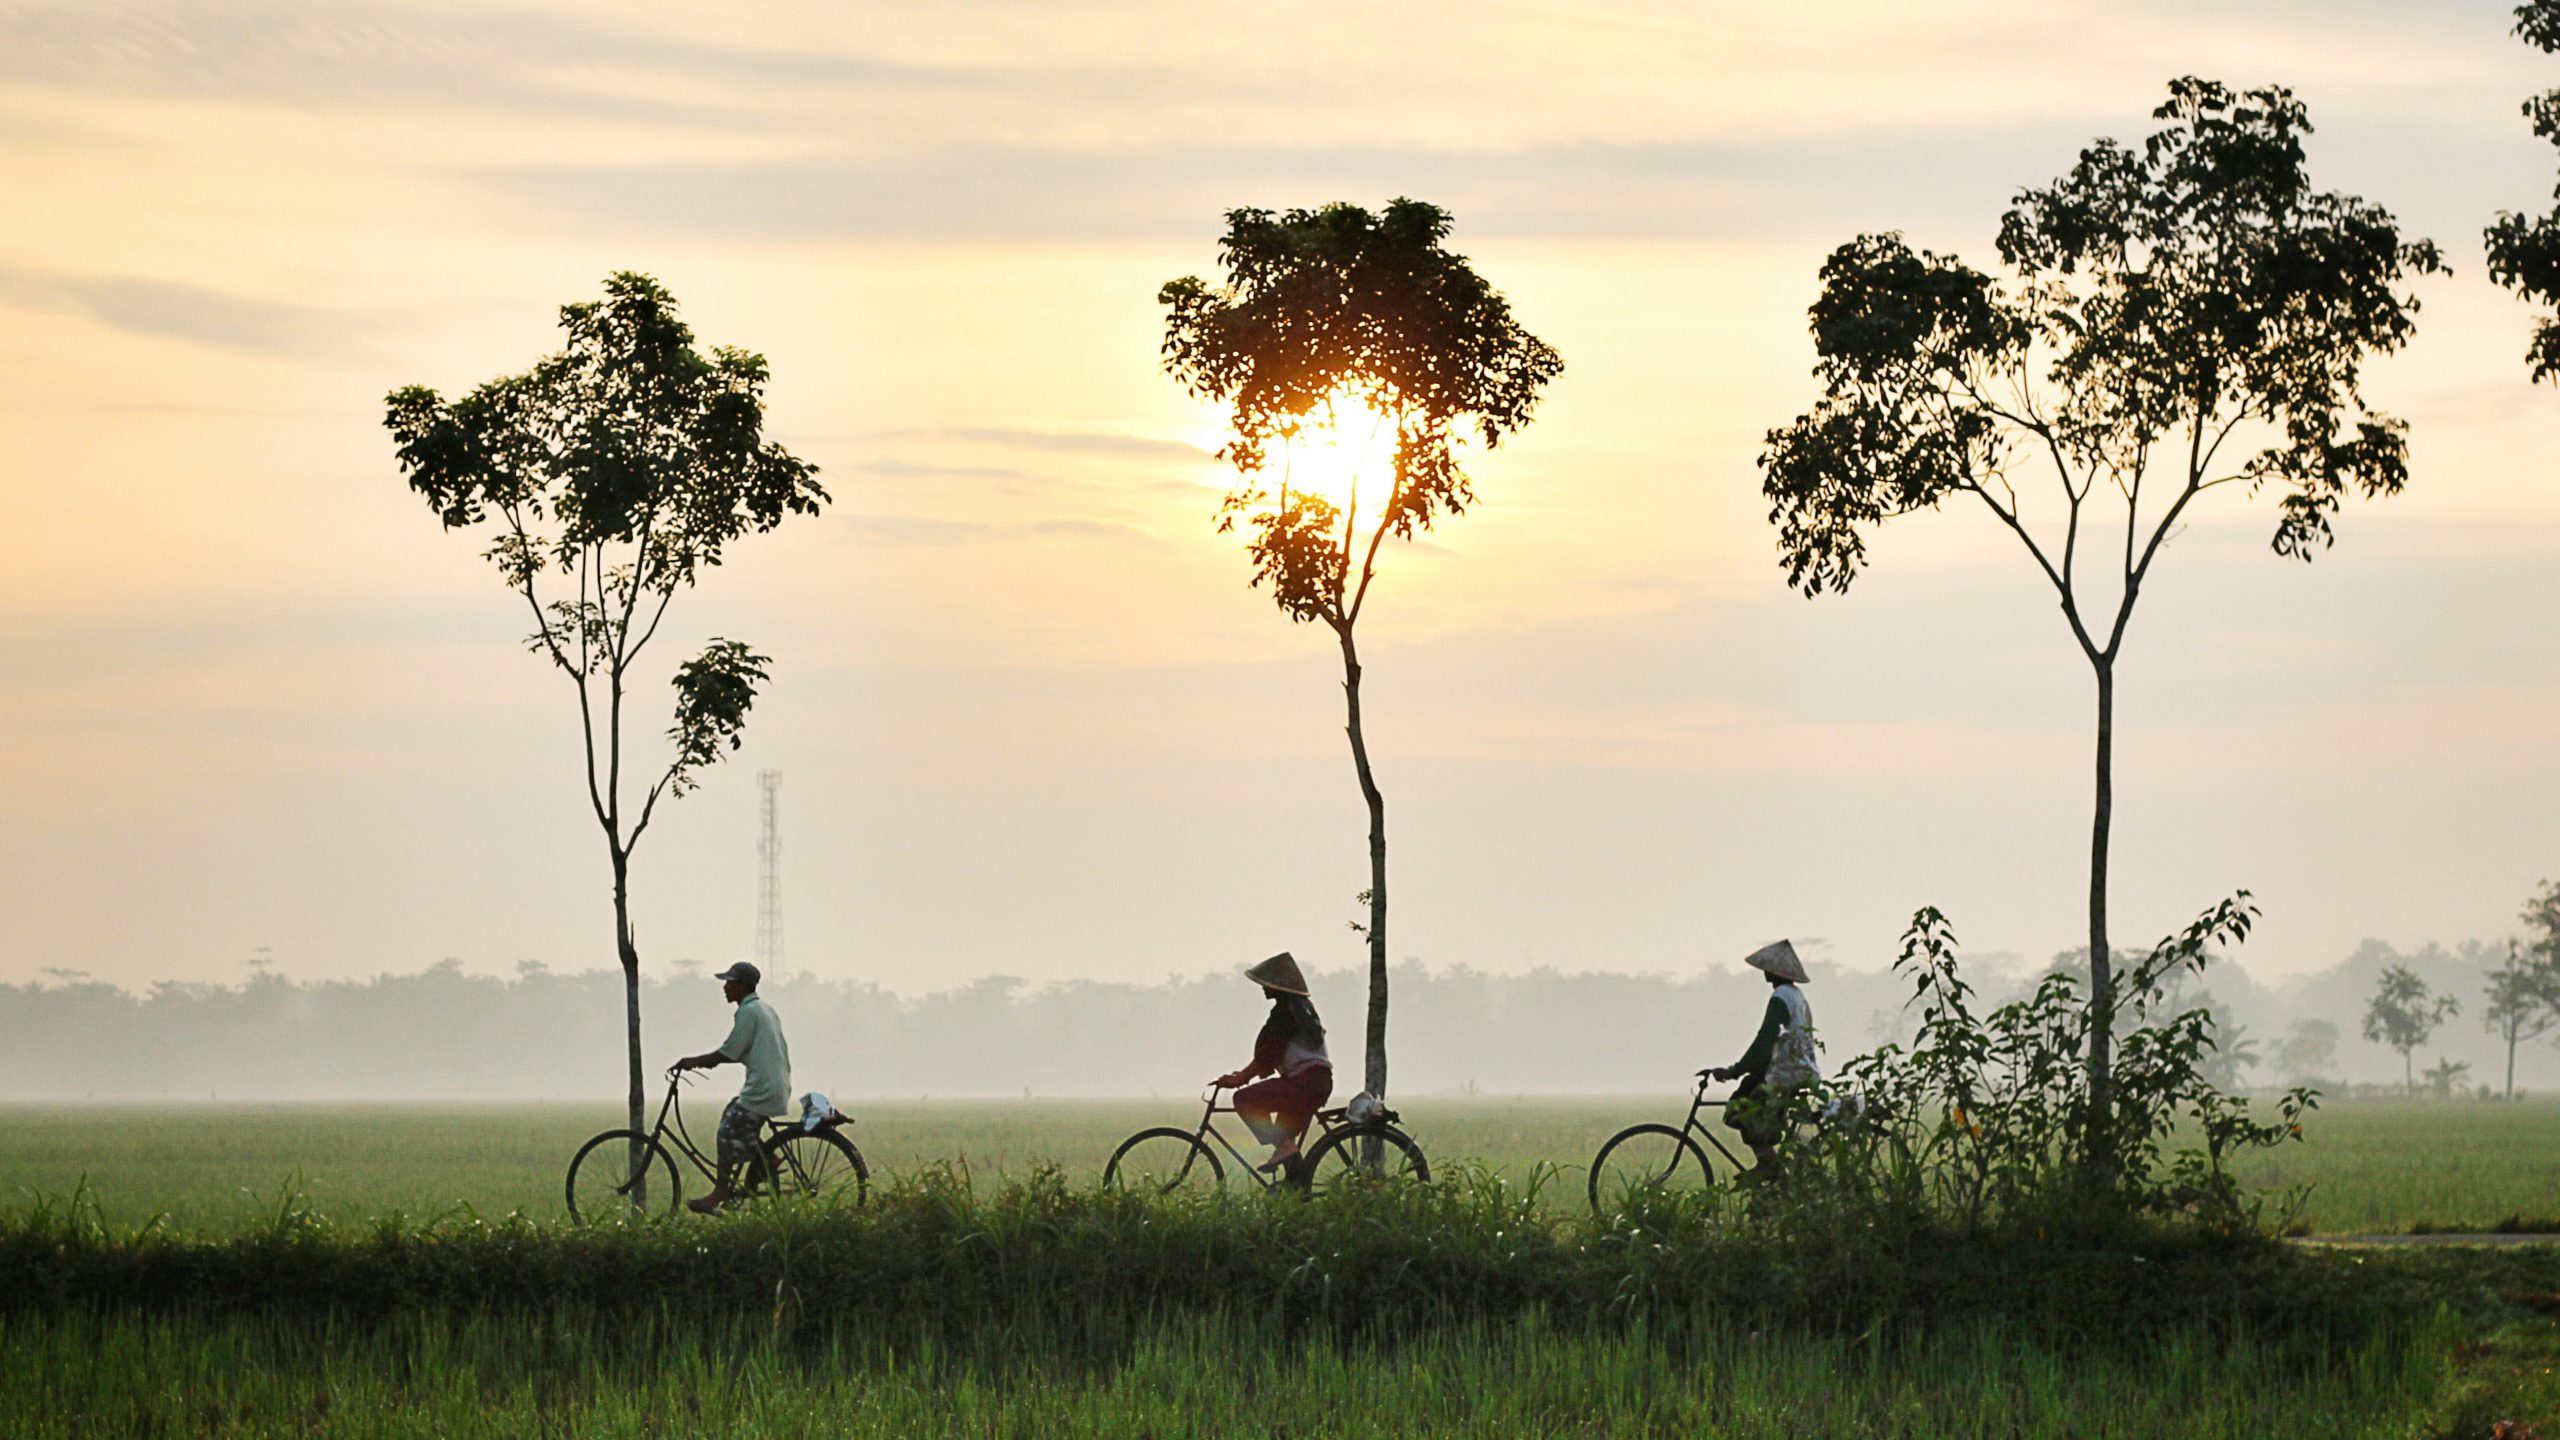 Rice paddy field with guys biking through